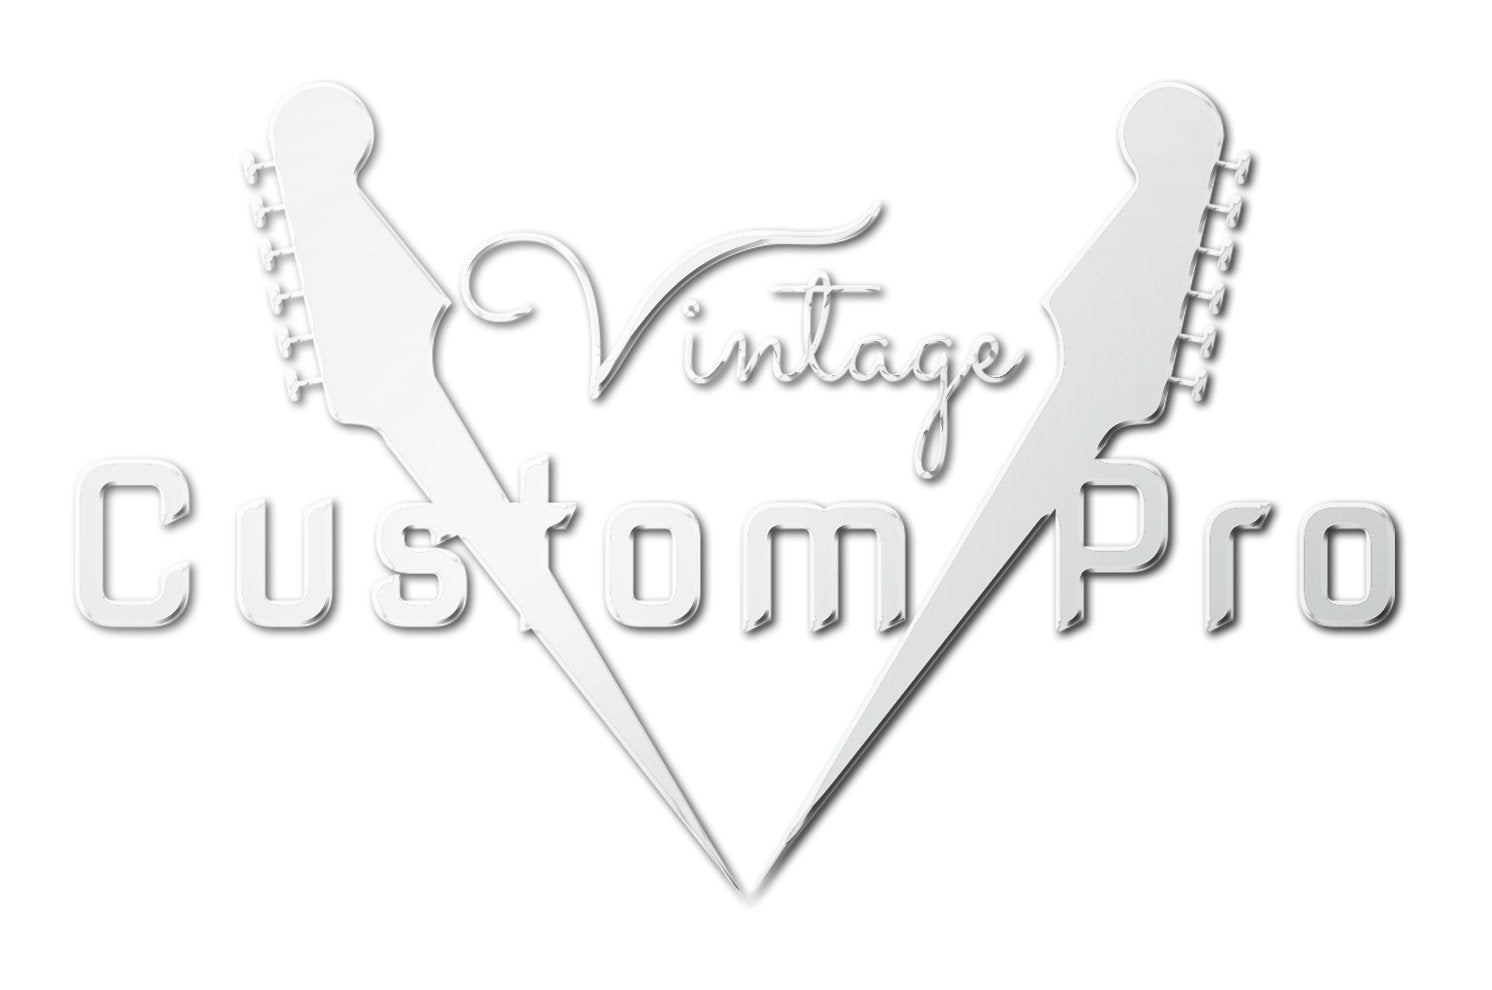 Vintage* VS6VGHB Electric Guitar, Electric Guitar for sale at Richards Guitars.